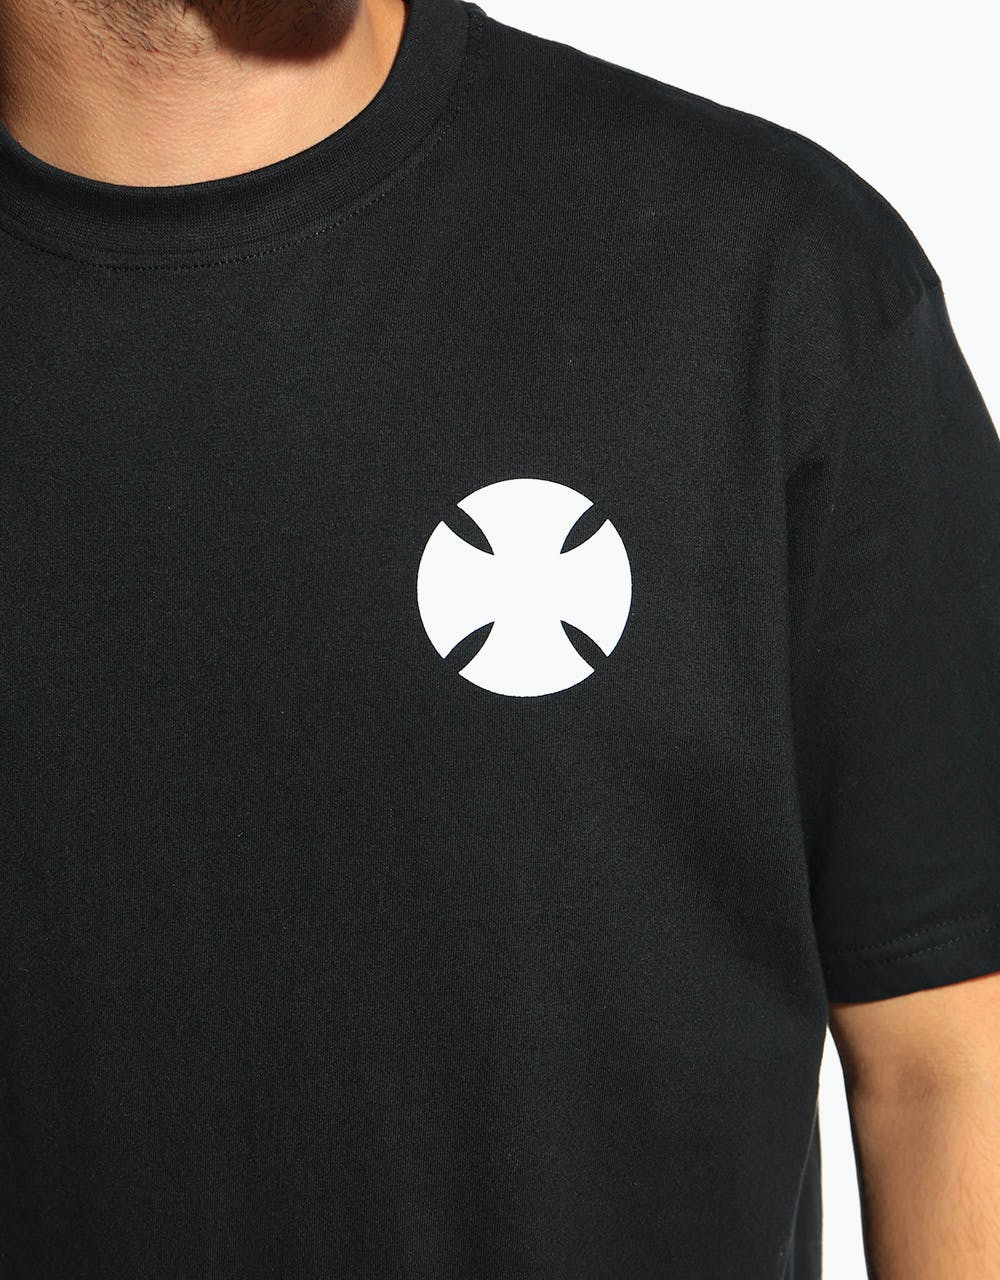 Independent G.F.L. Reaper T-Shirt - Black